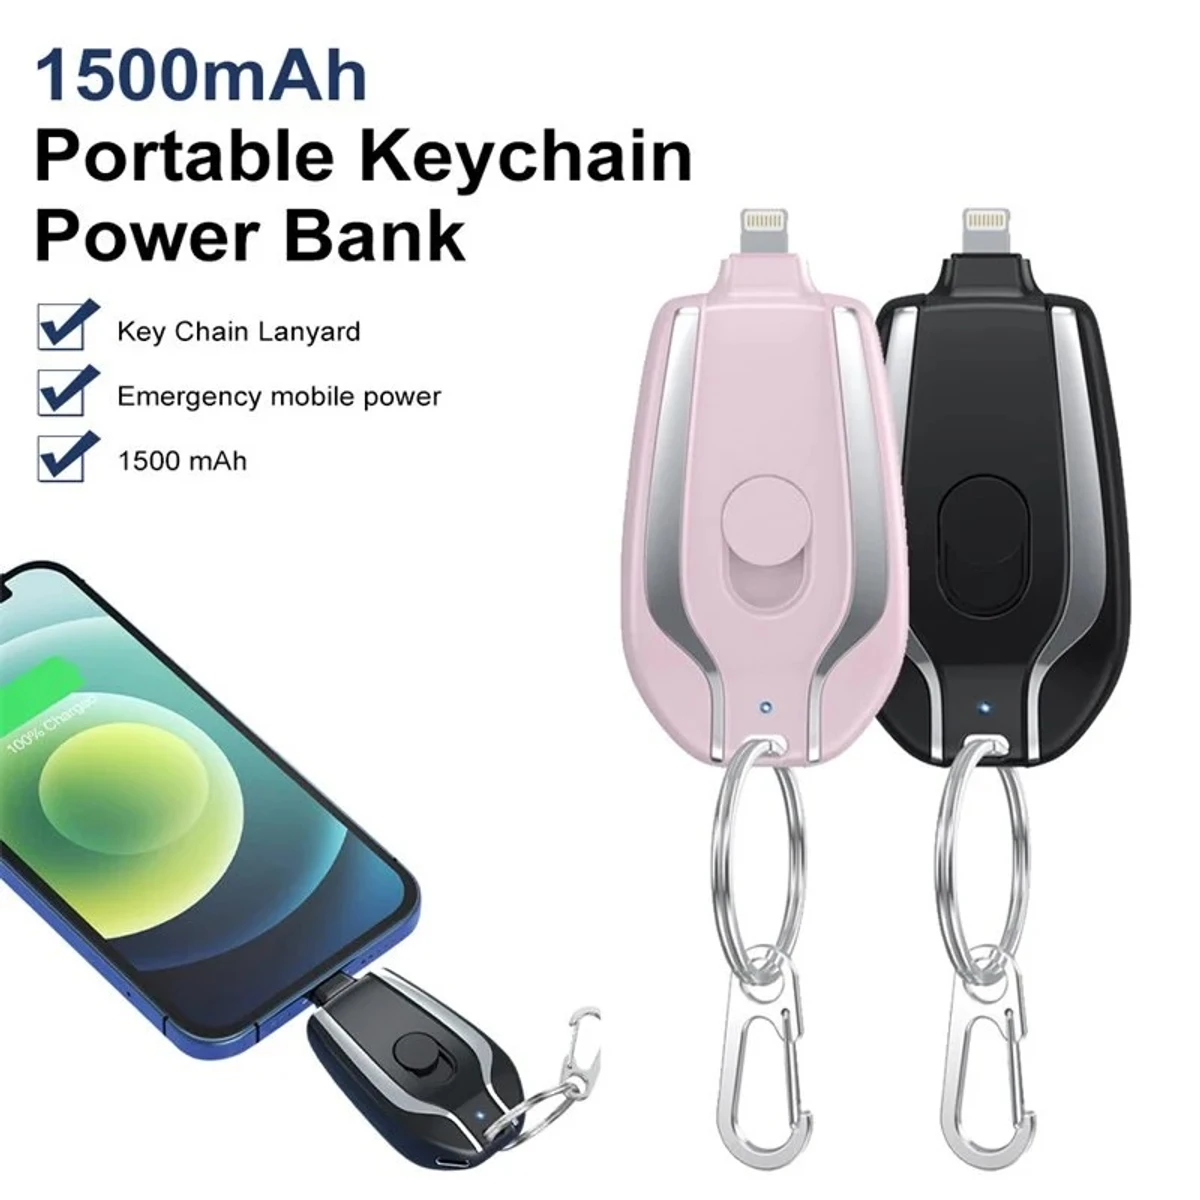 Emergency Keychain Portable Powerbank